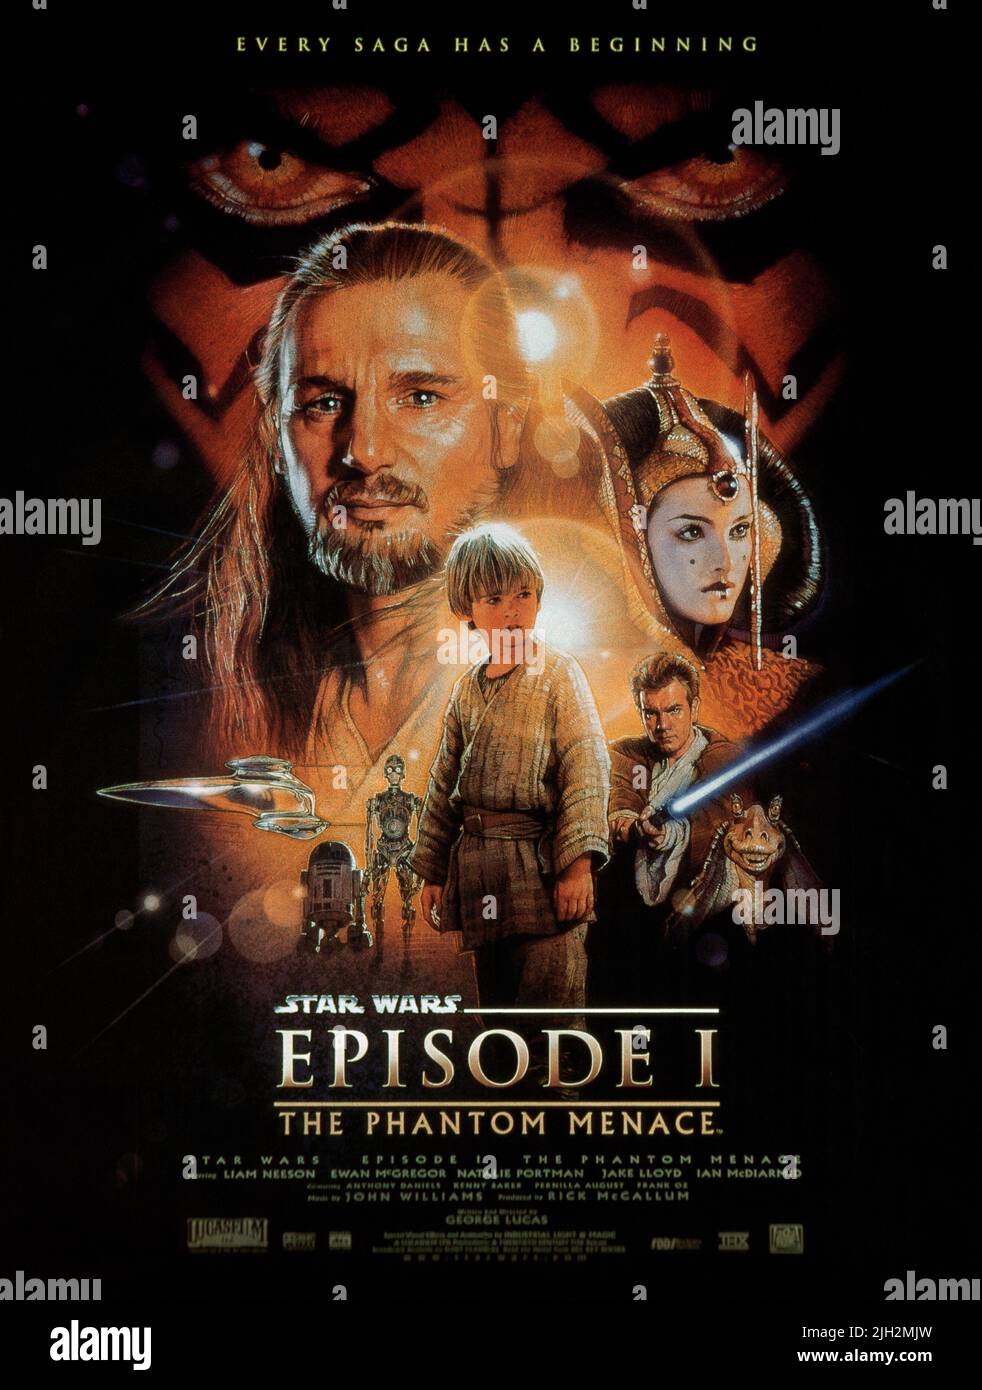 Star wars episode i poster fotografías e imágenes de alta resolución - Alamy